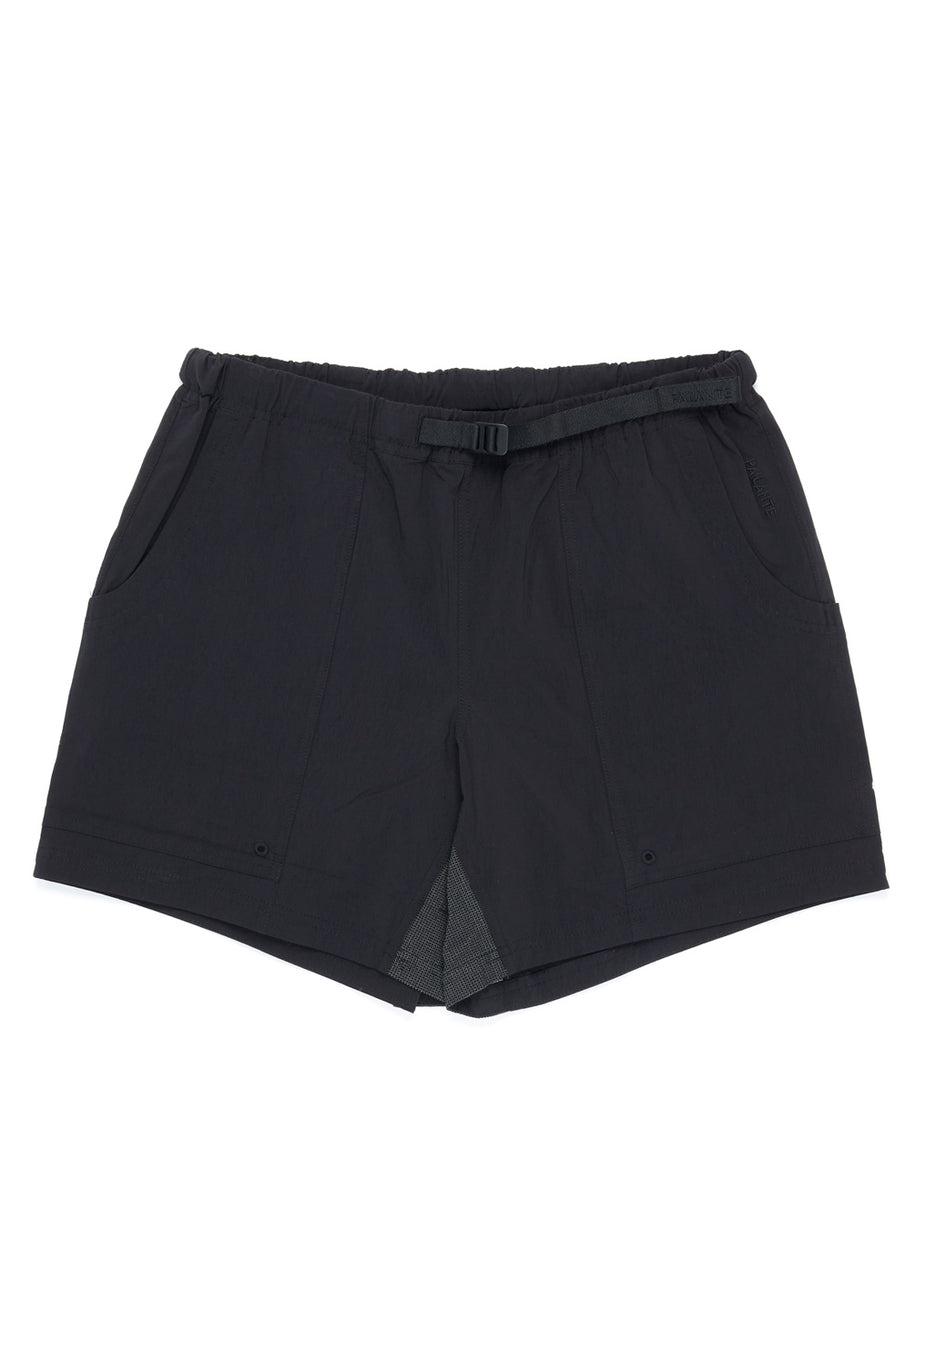 Pa'lante Packs Shorts - Black